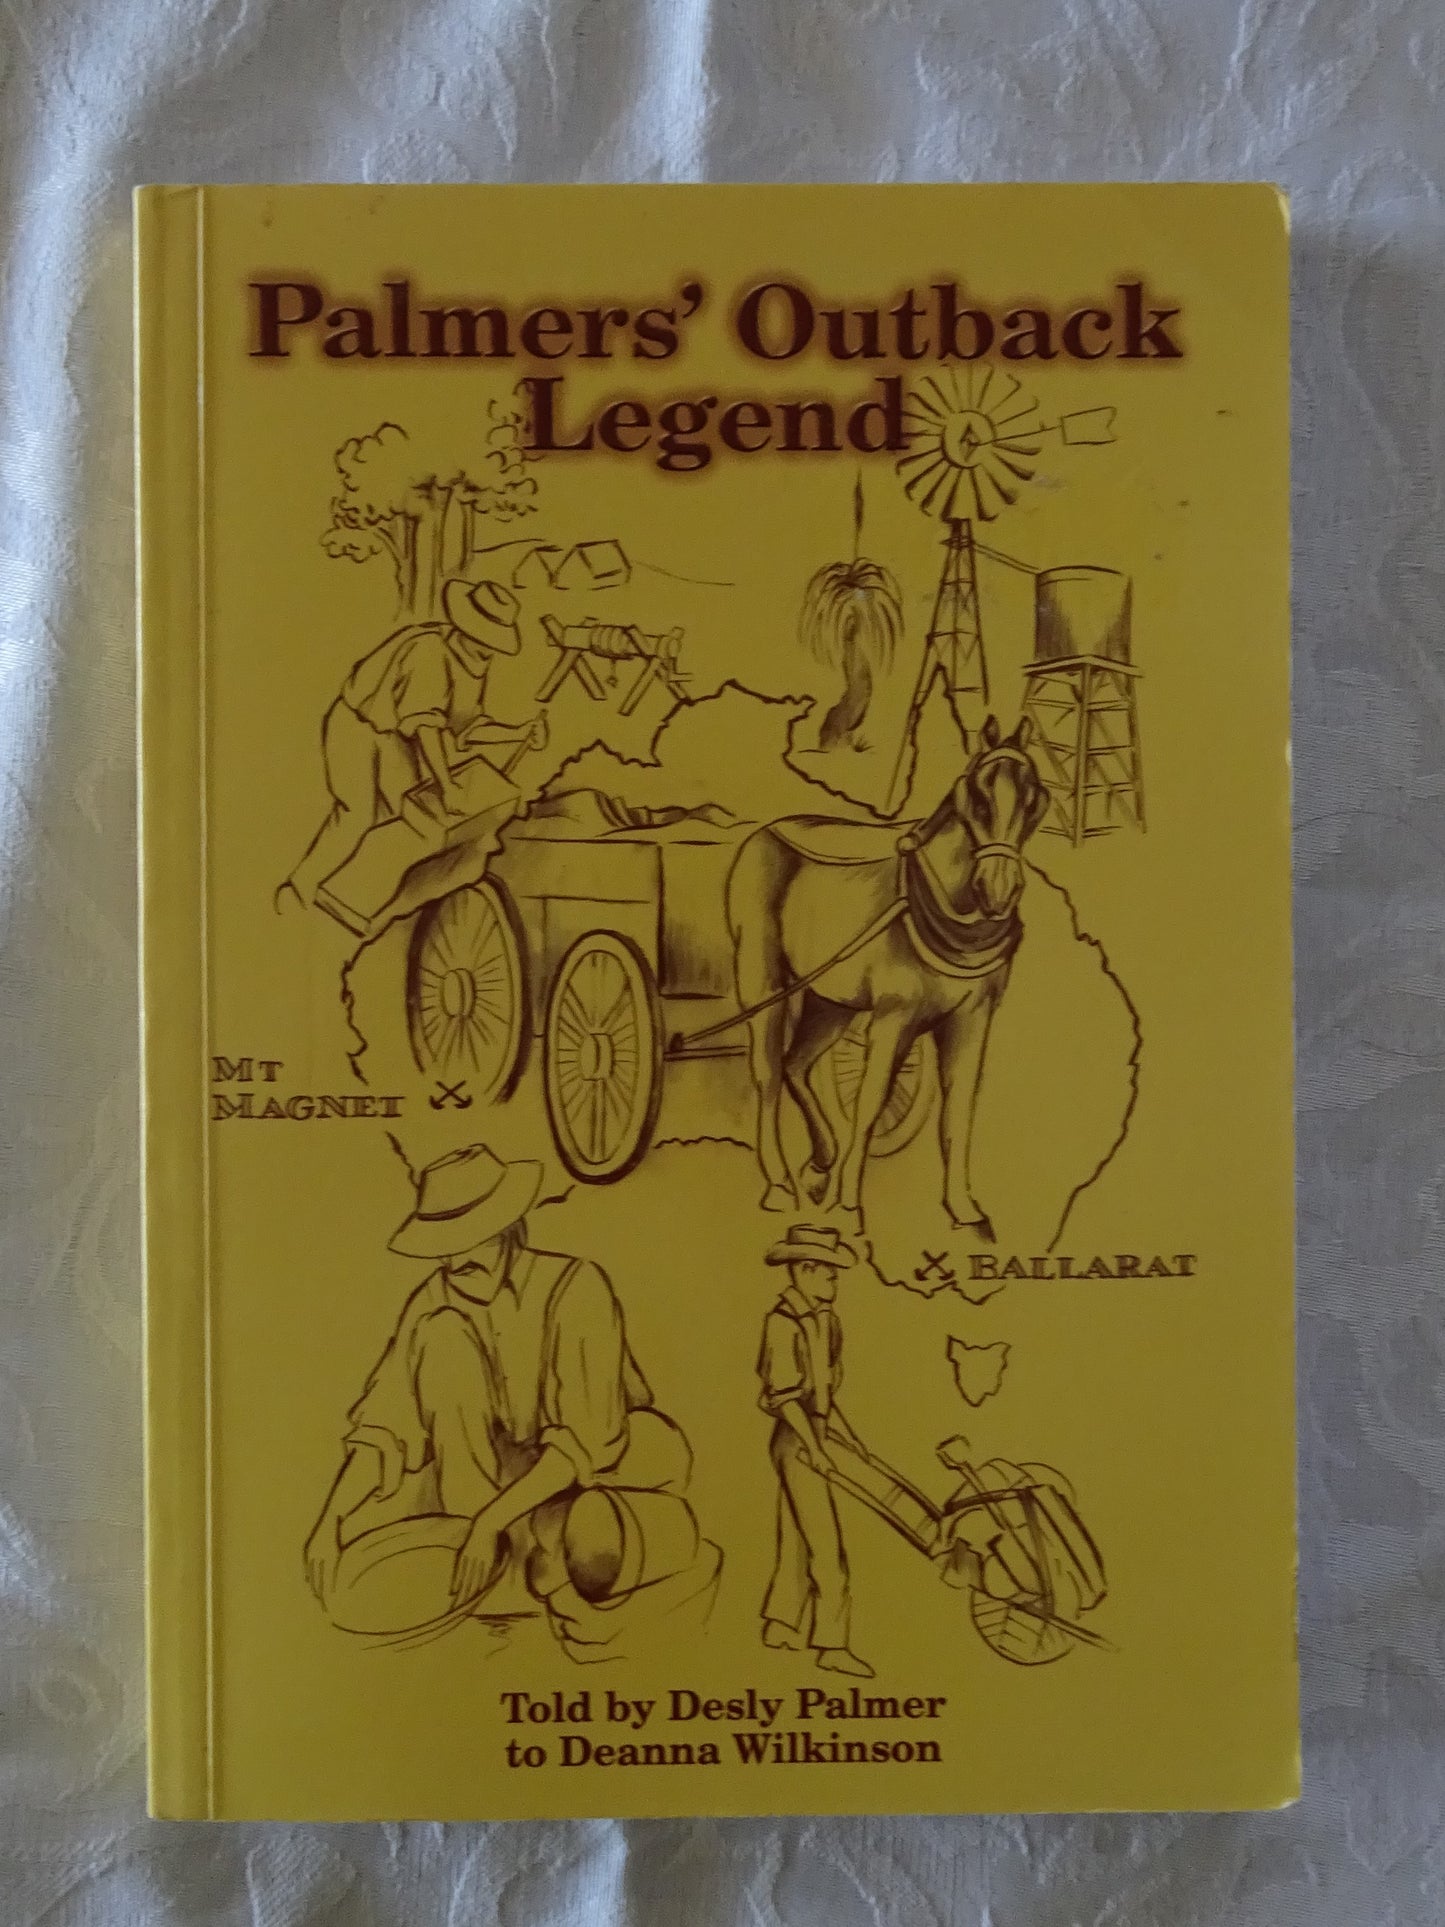 Palmers' Outback Legend by Desly Palmer